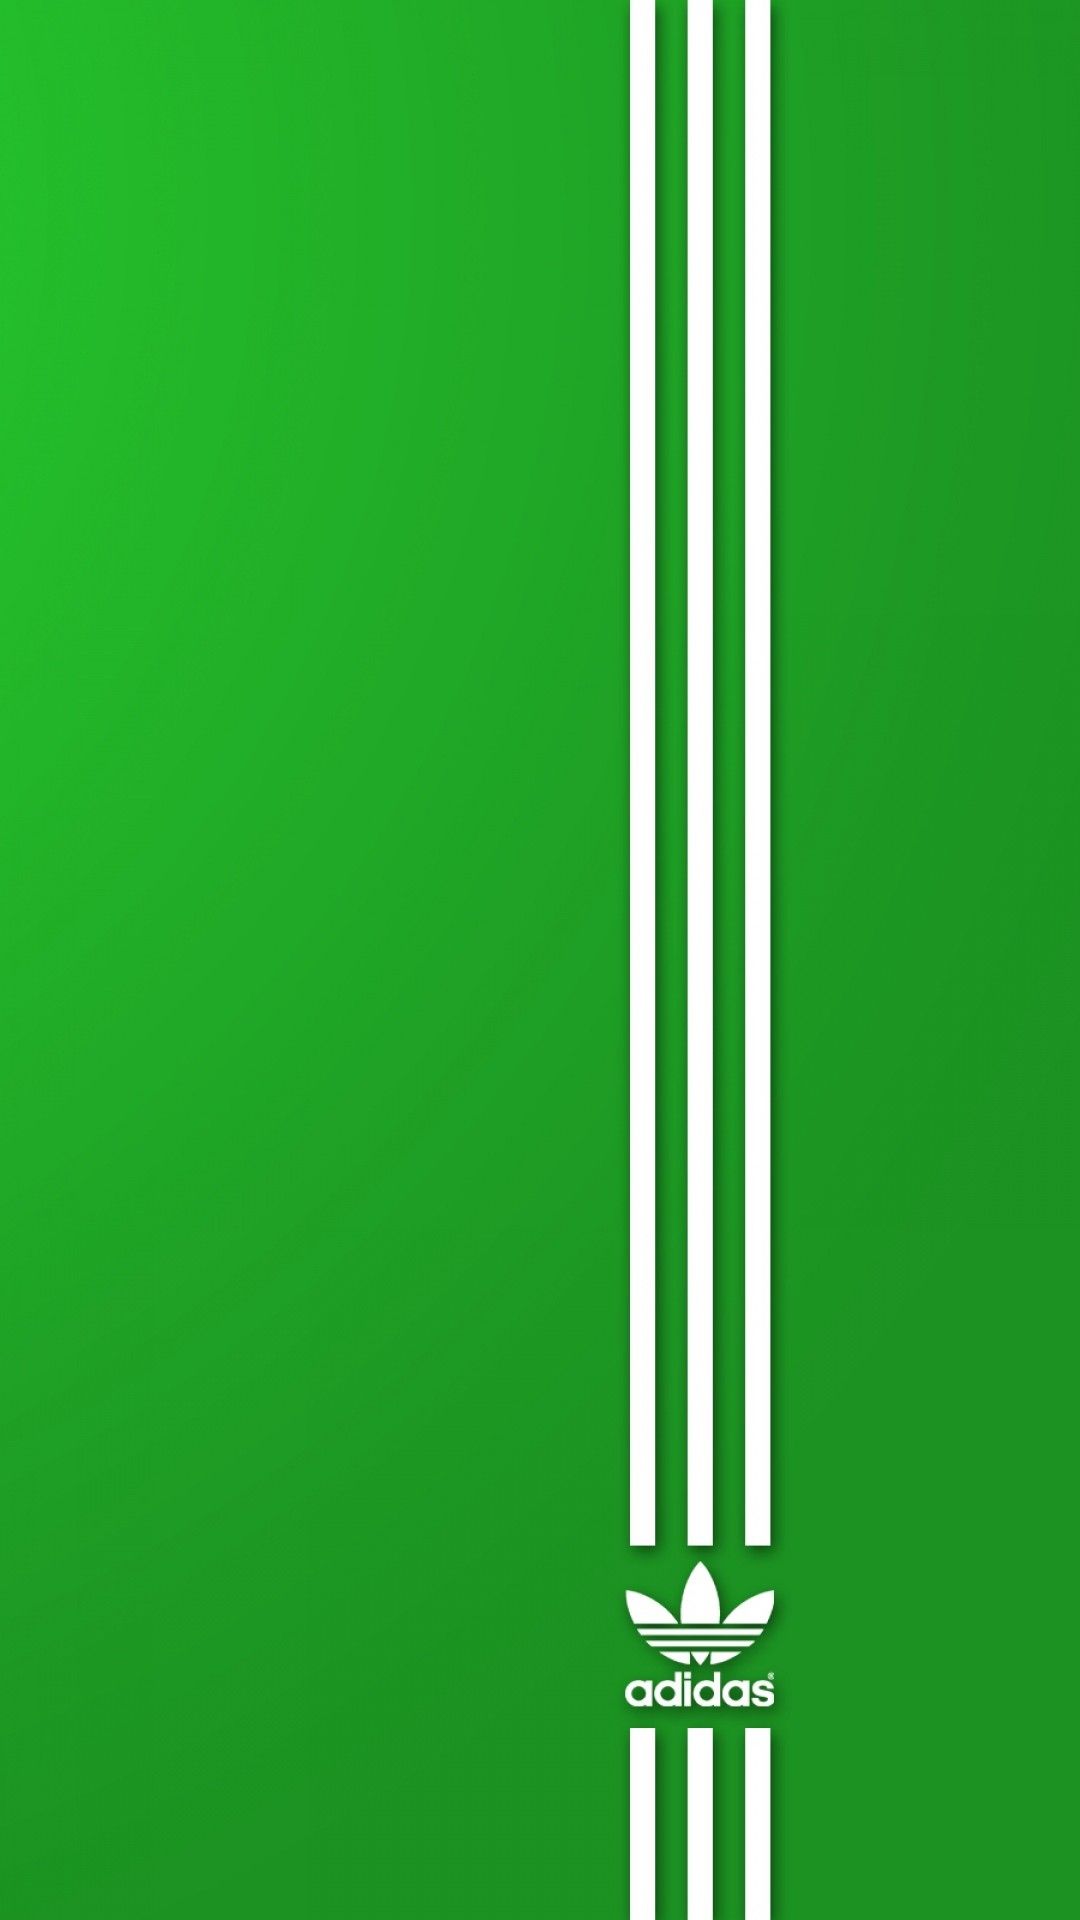 Free download Green Adidas iPhone Wallpaper HD Wallpaper Cool